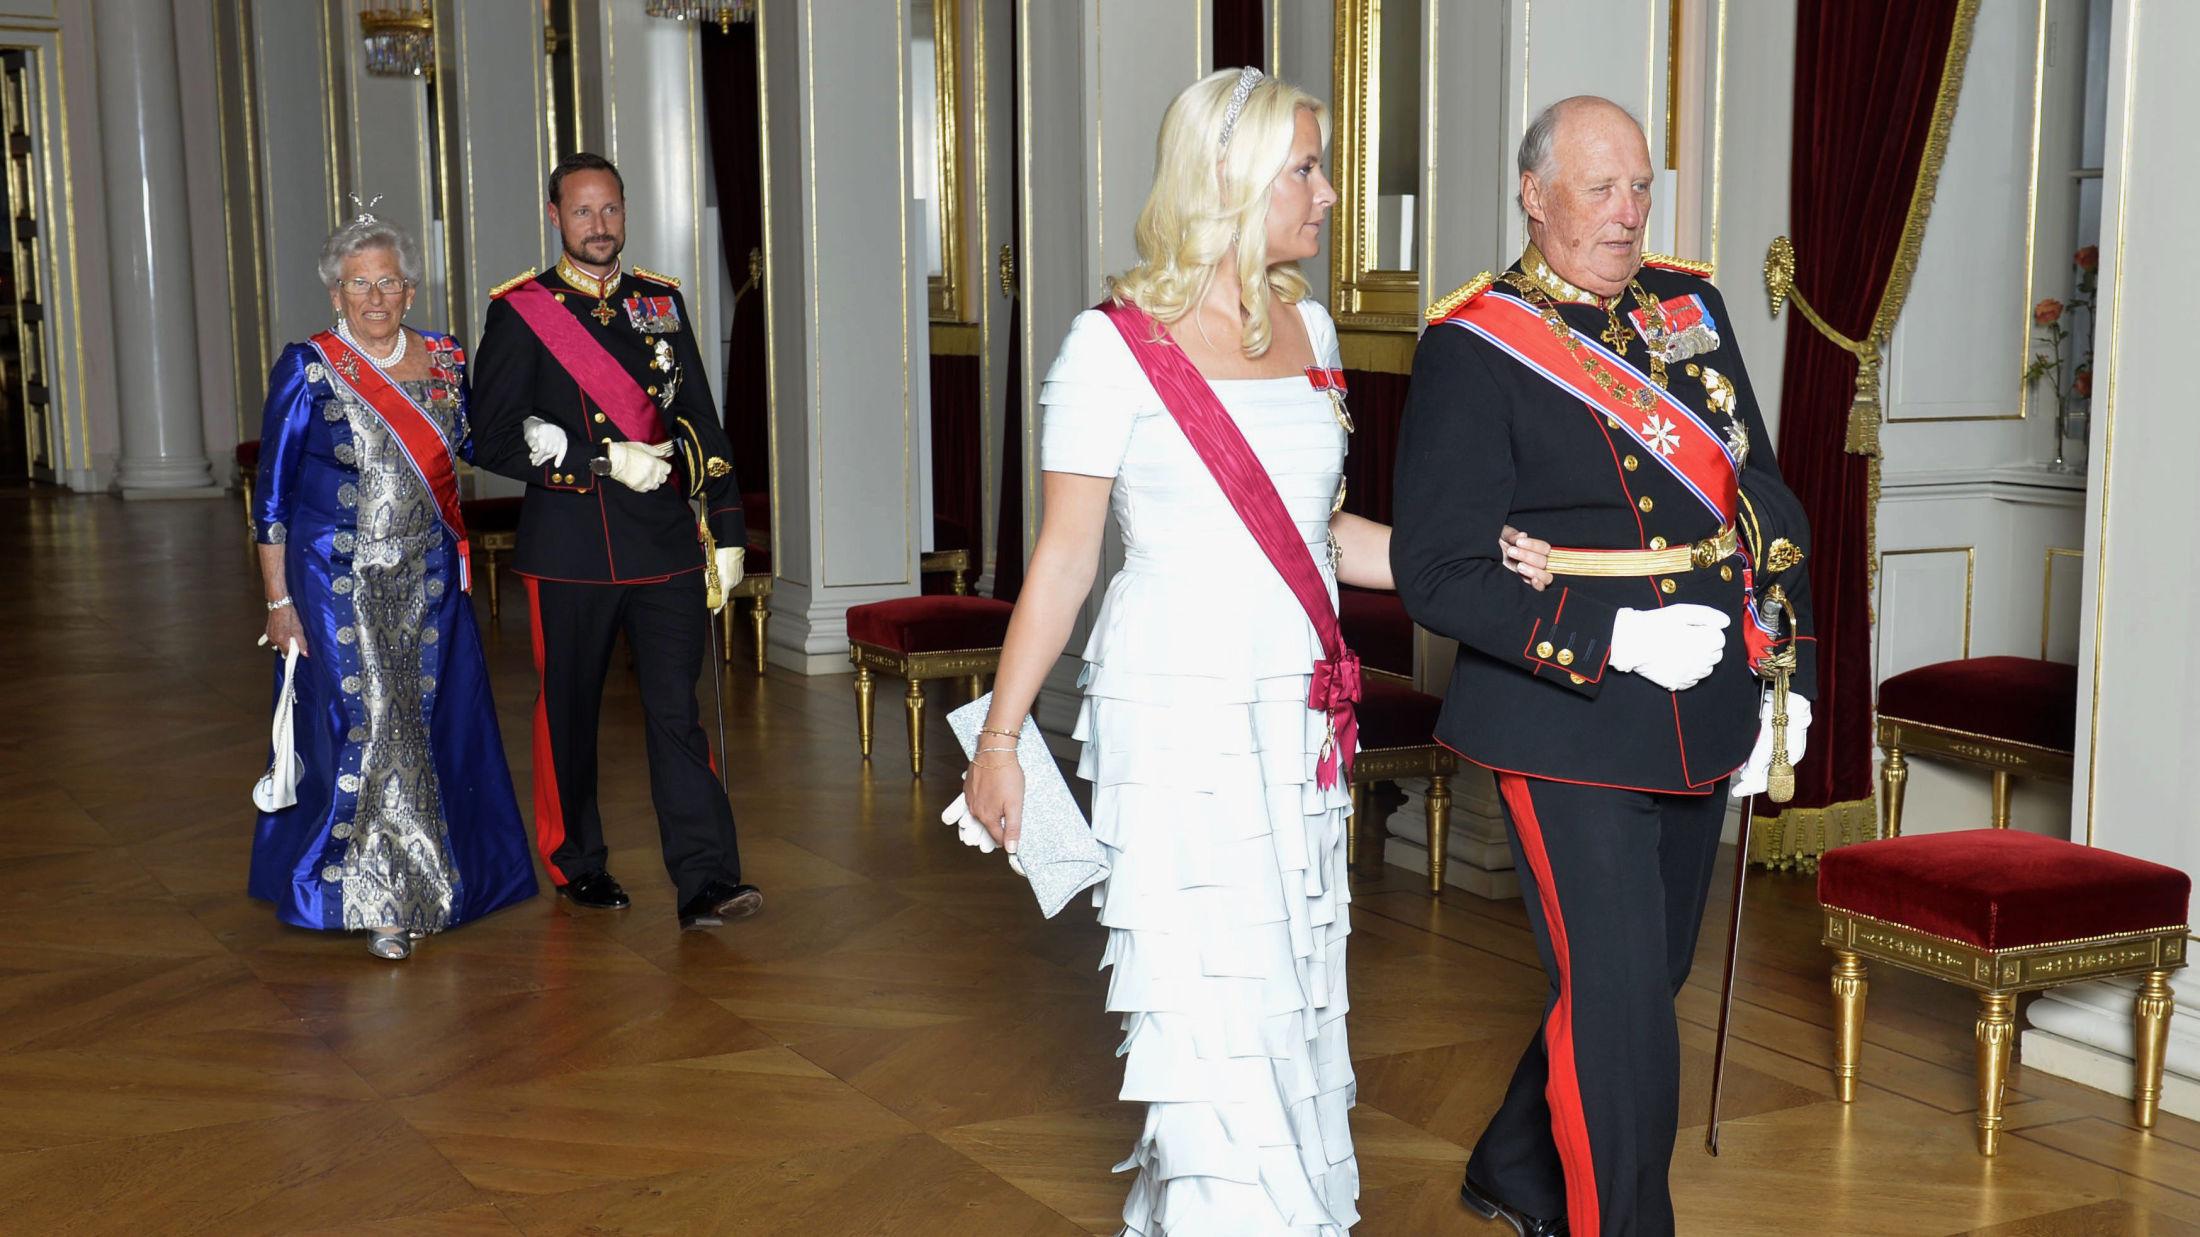 KJOLEFIN: Mette-Marit kom i redesignet kjole på gallamiddag på slottet tirsdag. Kjolen ble kombinert med matchende clutch. Foto: NTB Scanpix